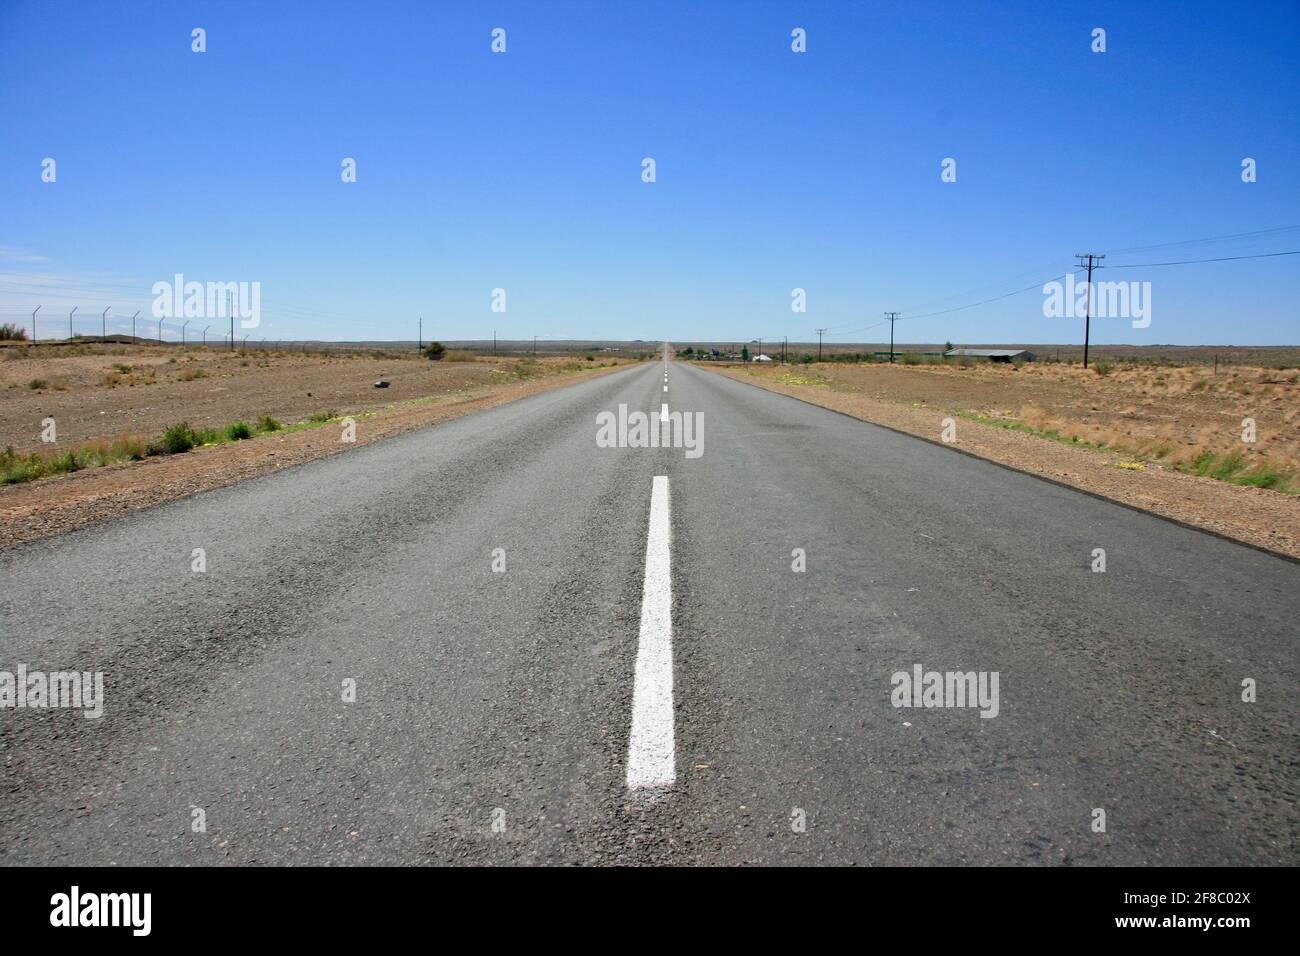 Hitchhiking lungo l'autostrada vuota senza persone a Keetmanshoop, Namibia. Foto Stock